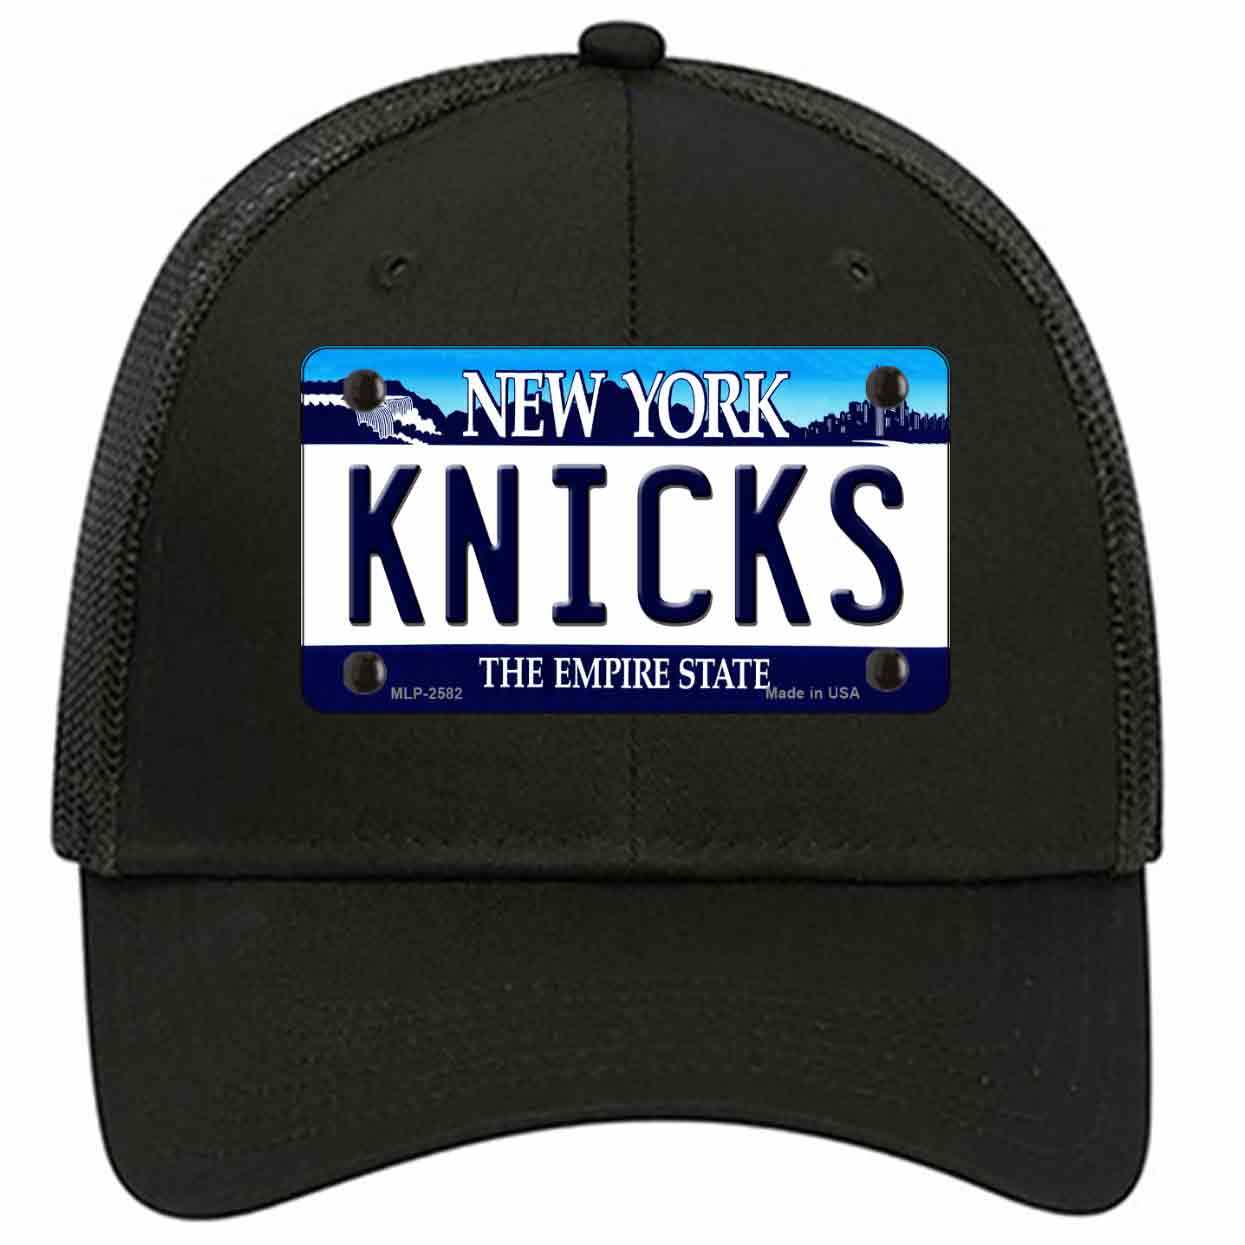 Primary image for Knicks New York State Novelty Black Mesh License Plate Hat